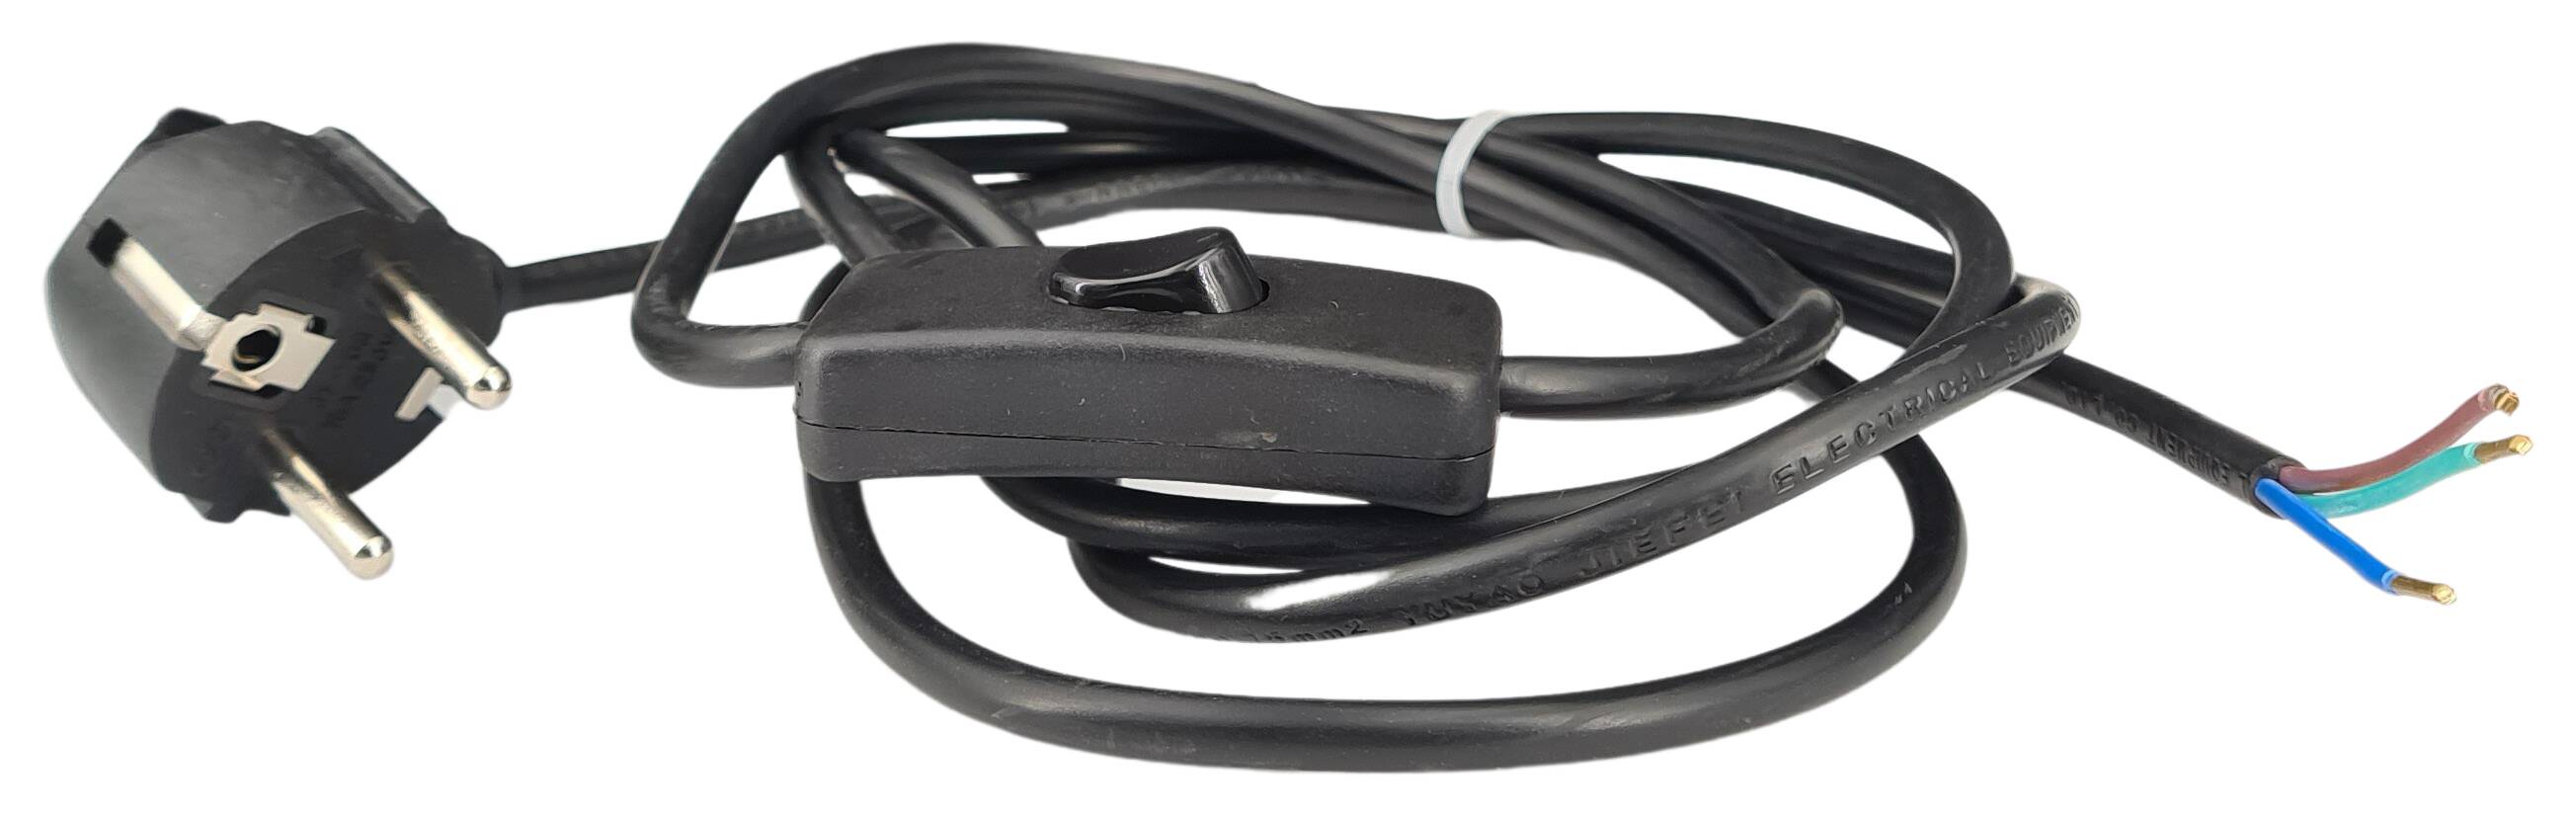 cord-set 3G 0,75/2000/800 with schuko angled plug and handswitch black